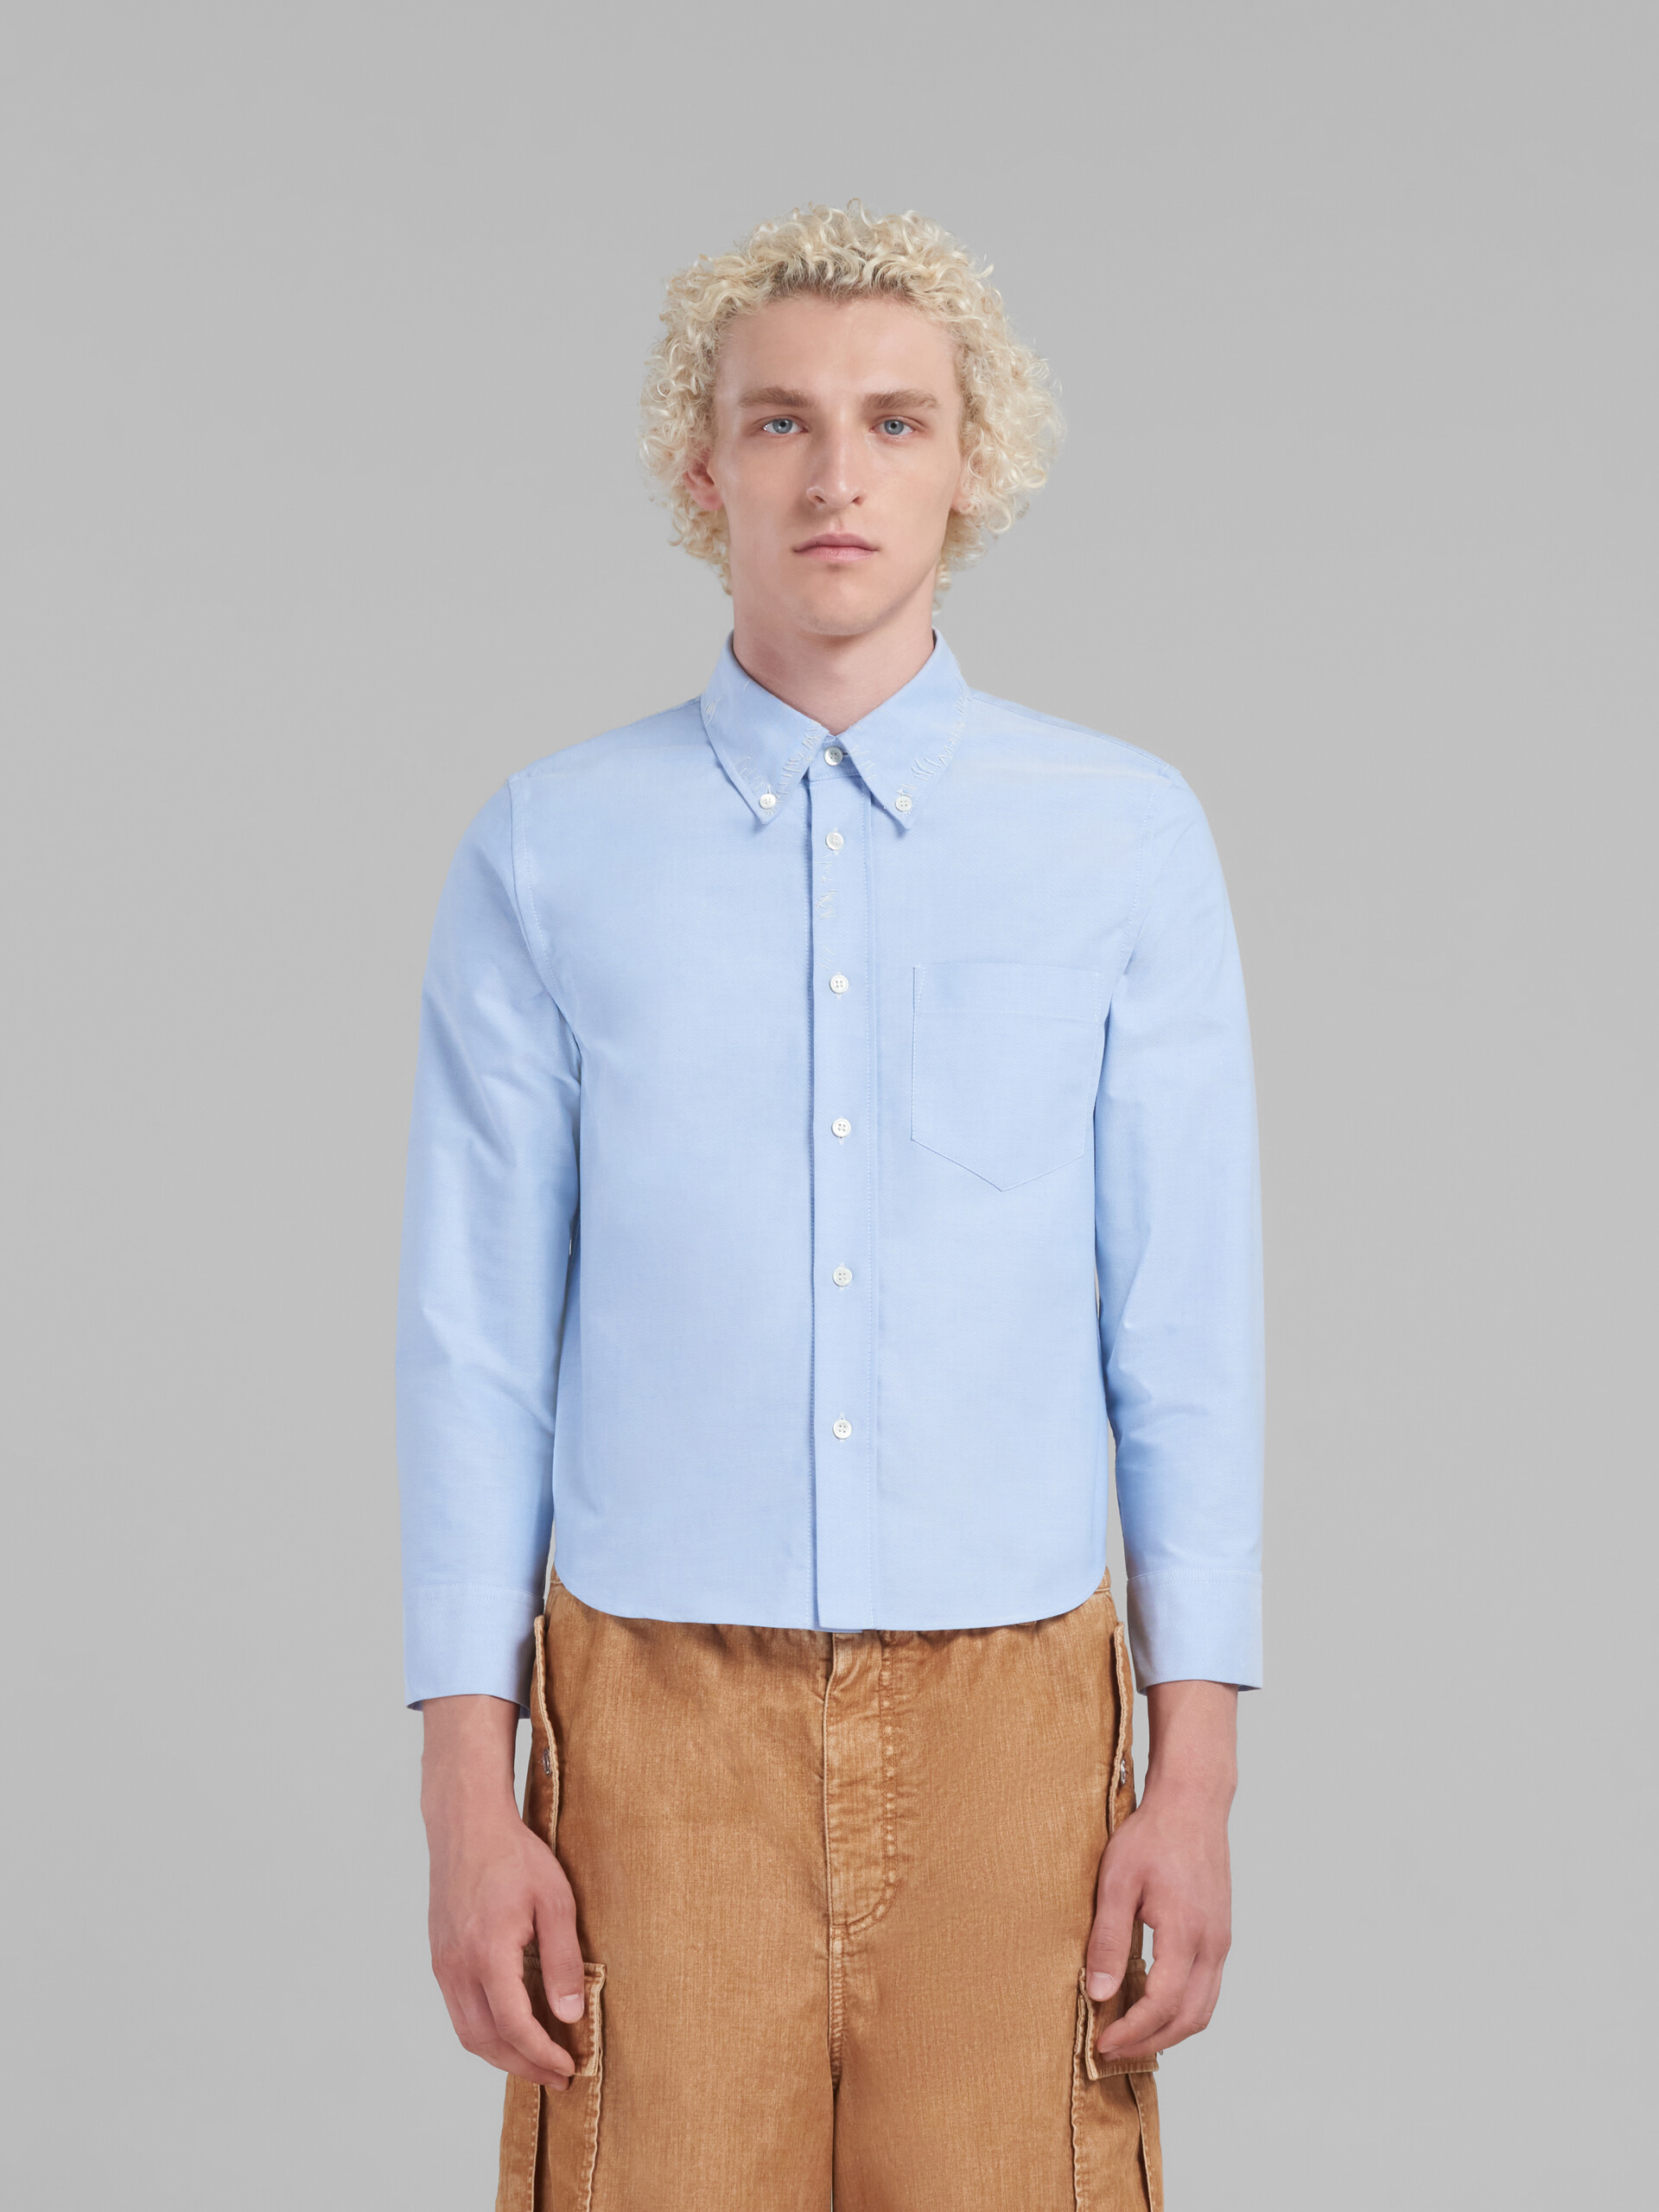 Chemise Oxford courte bleu clair avec effet raccommodé Marni - Chemises - Image 2